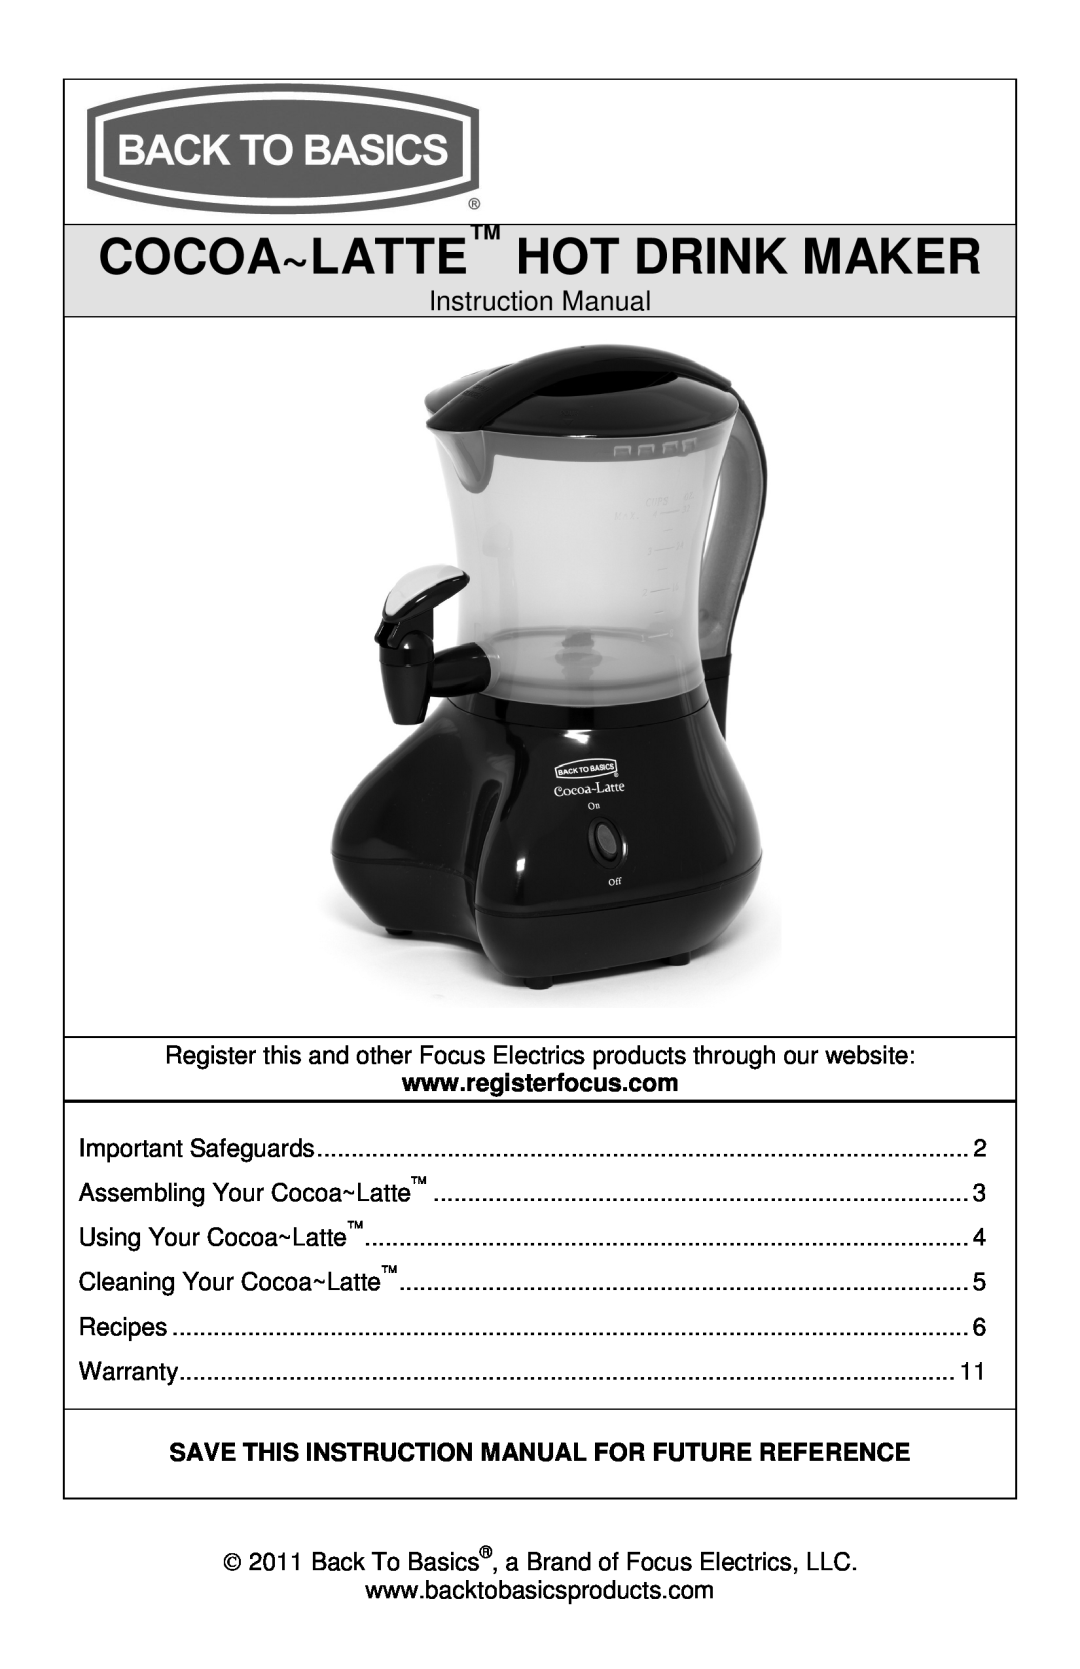 West Bend Back to Basics instruction manual Cocoa~Latte Hot Drink Maker, Instruction Manual 